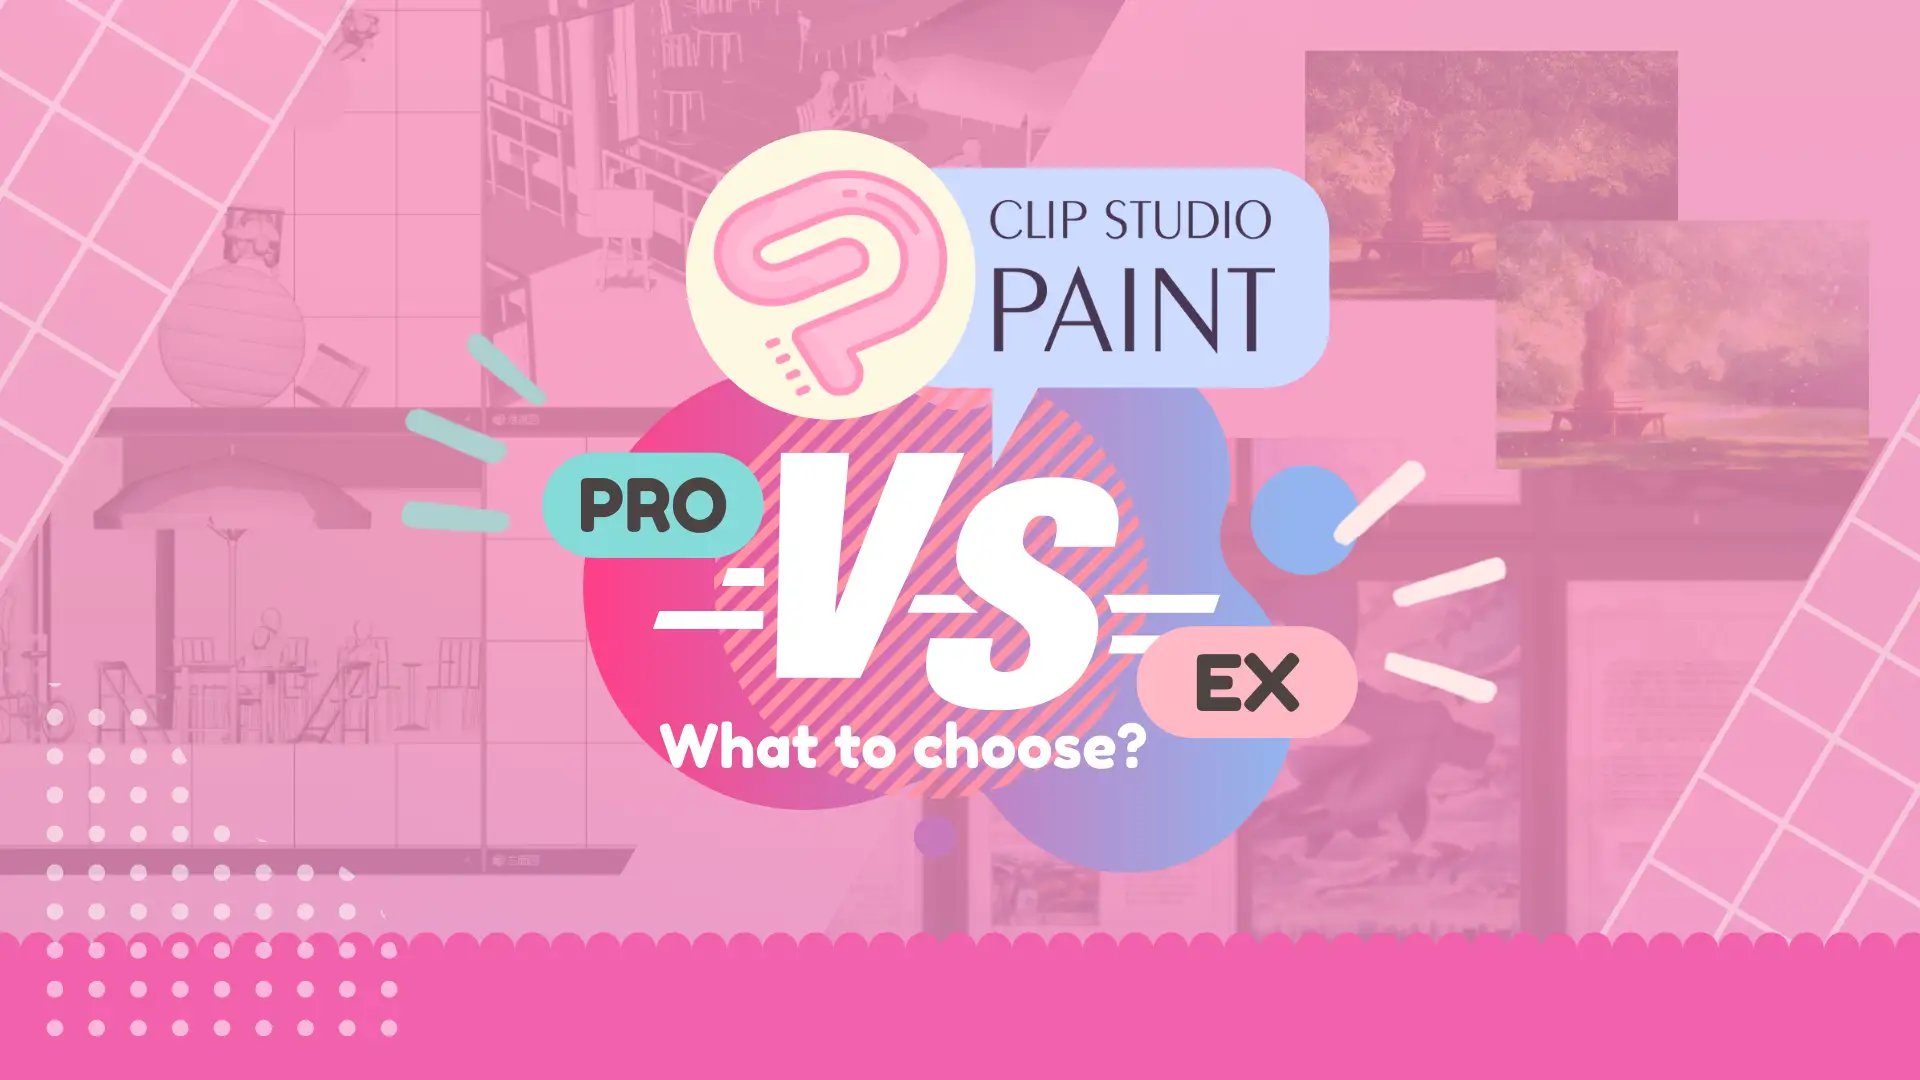 Clip Studio Paint EX VS PRO Comparison – Which One is Better For